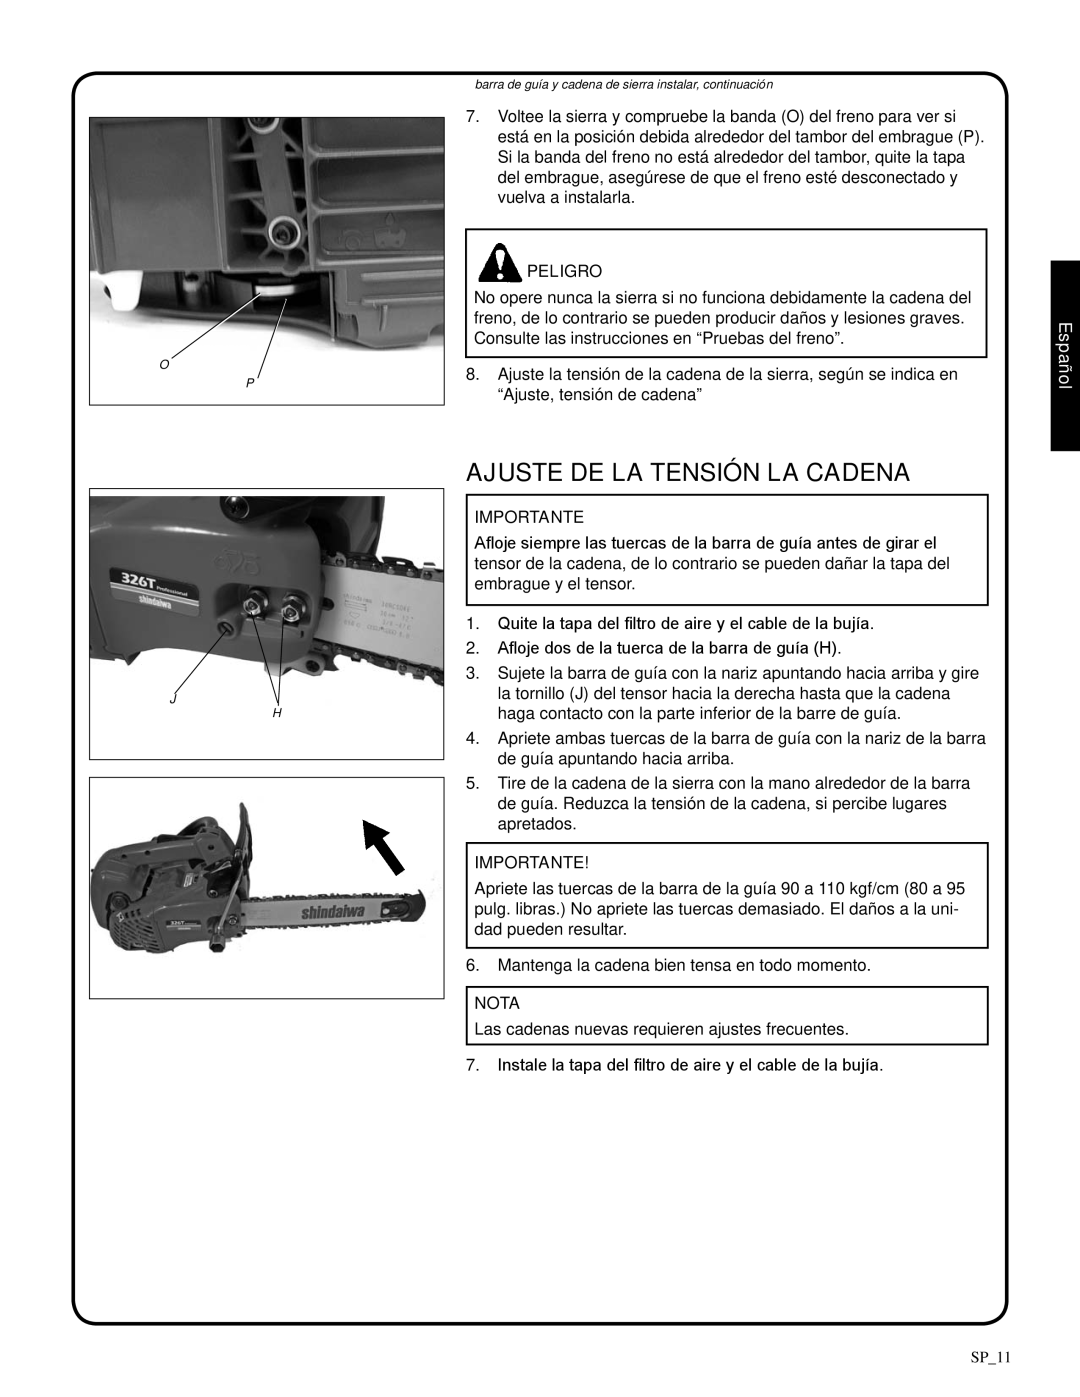 Shindaiwa 326T, 82085 manual ajuste de la tensión la cadena, Peligro, Nota, Importante, Español 